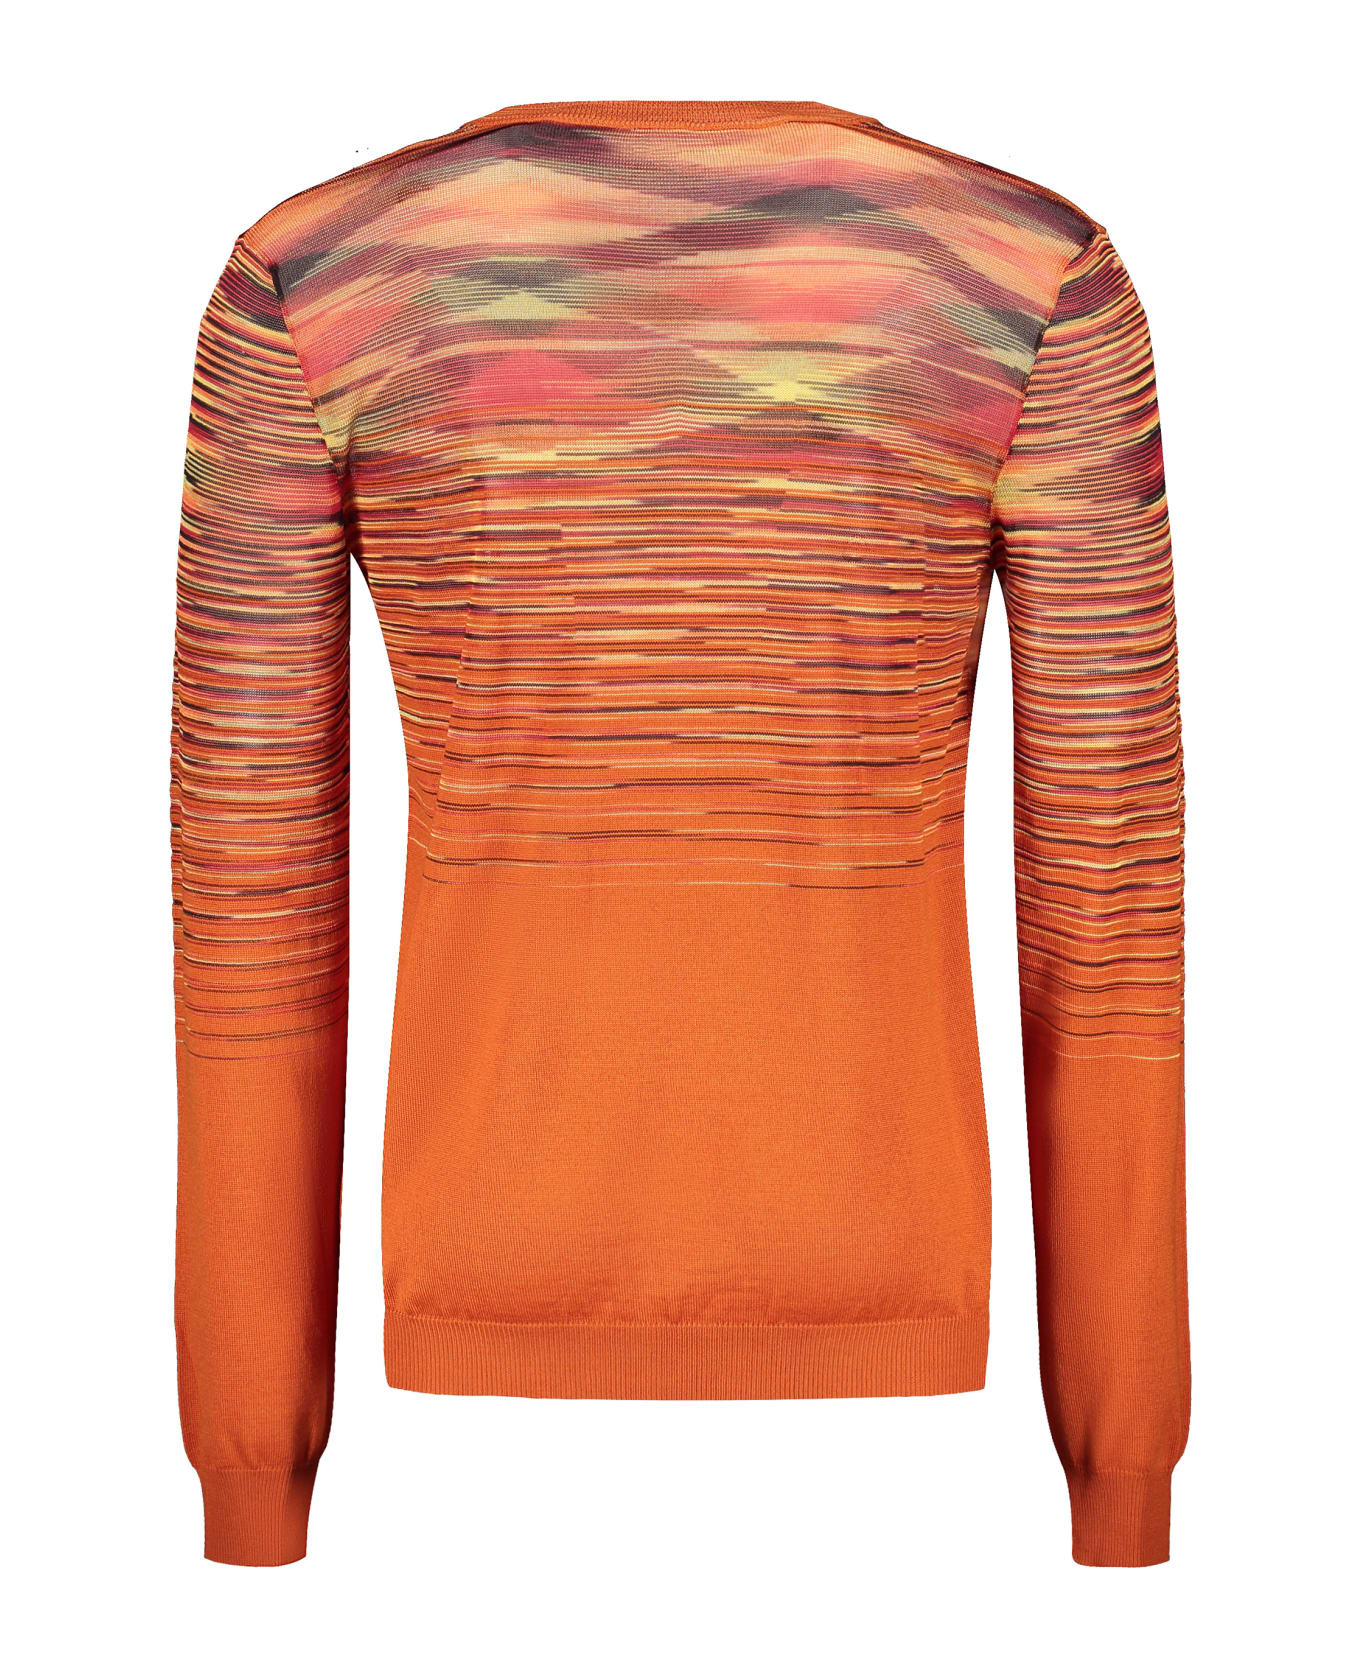 M Missoni Wool V-neck Sweater - Orange